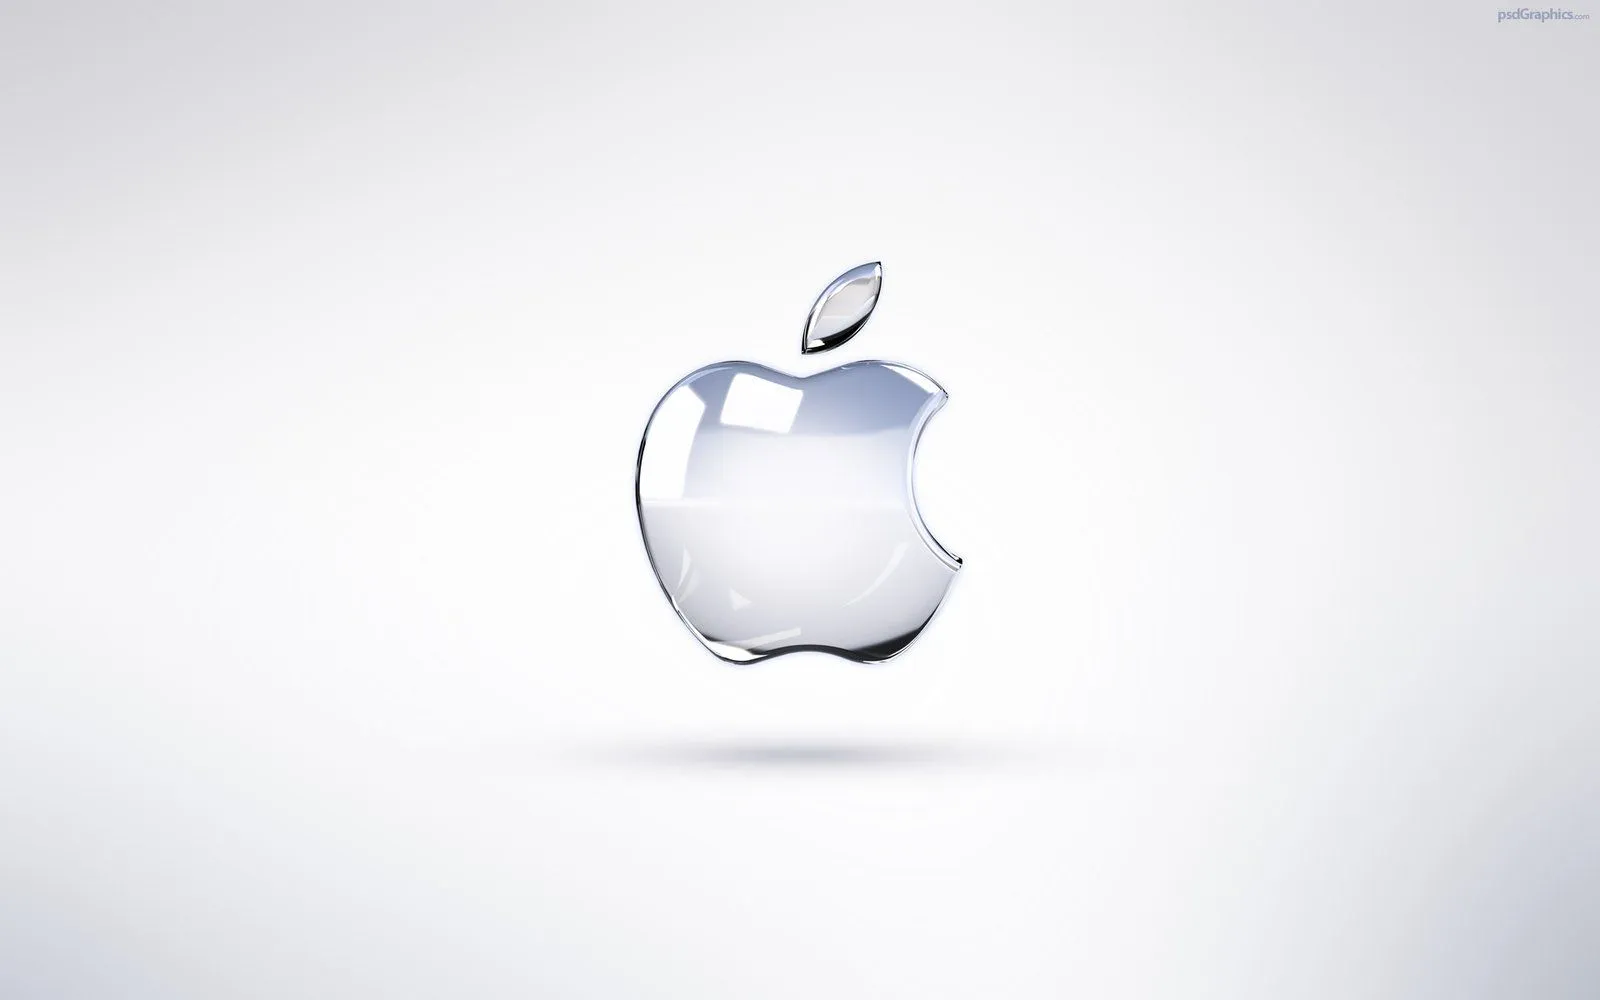 Apple logo wallpaper 1920x1200.jpg 13241